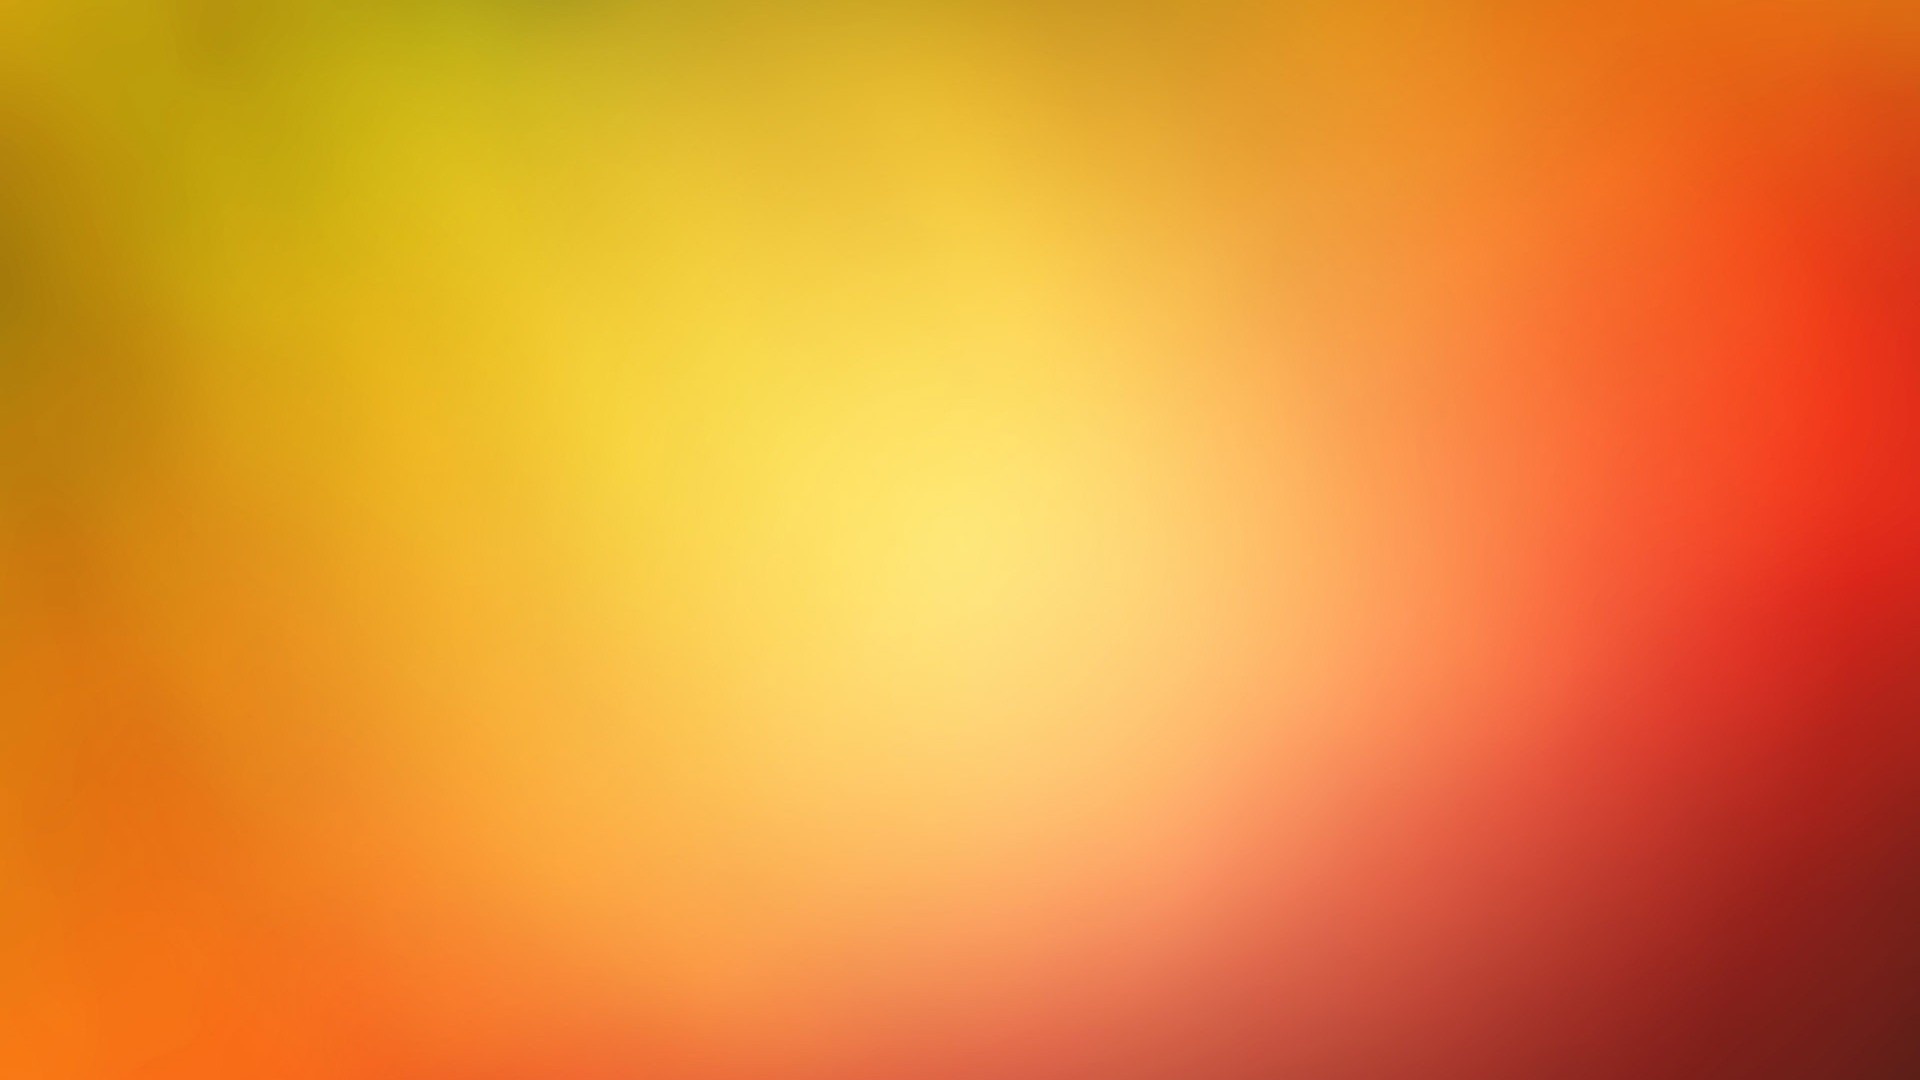 plain colour wallpaper free download,orange,yellow,red,amber,sky